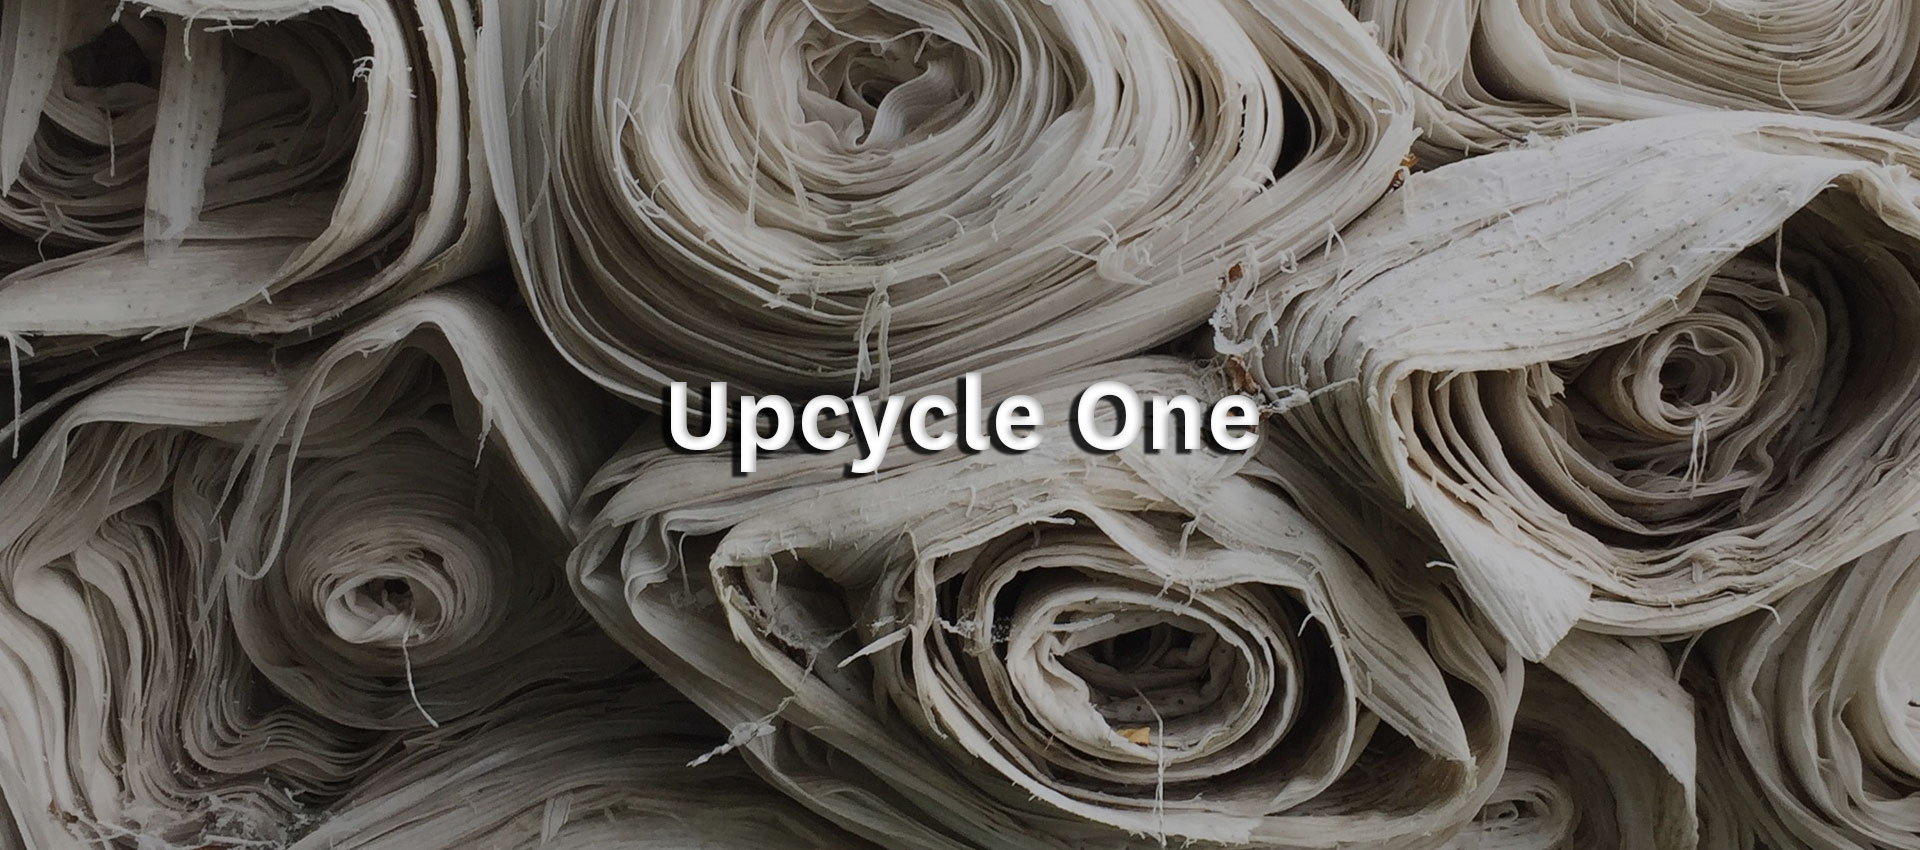 Upcycle One